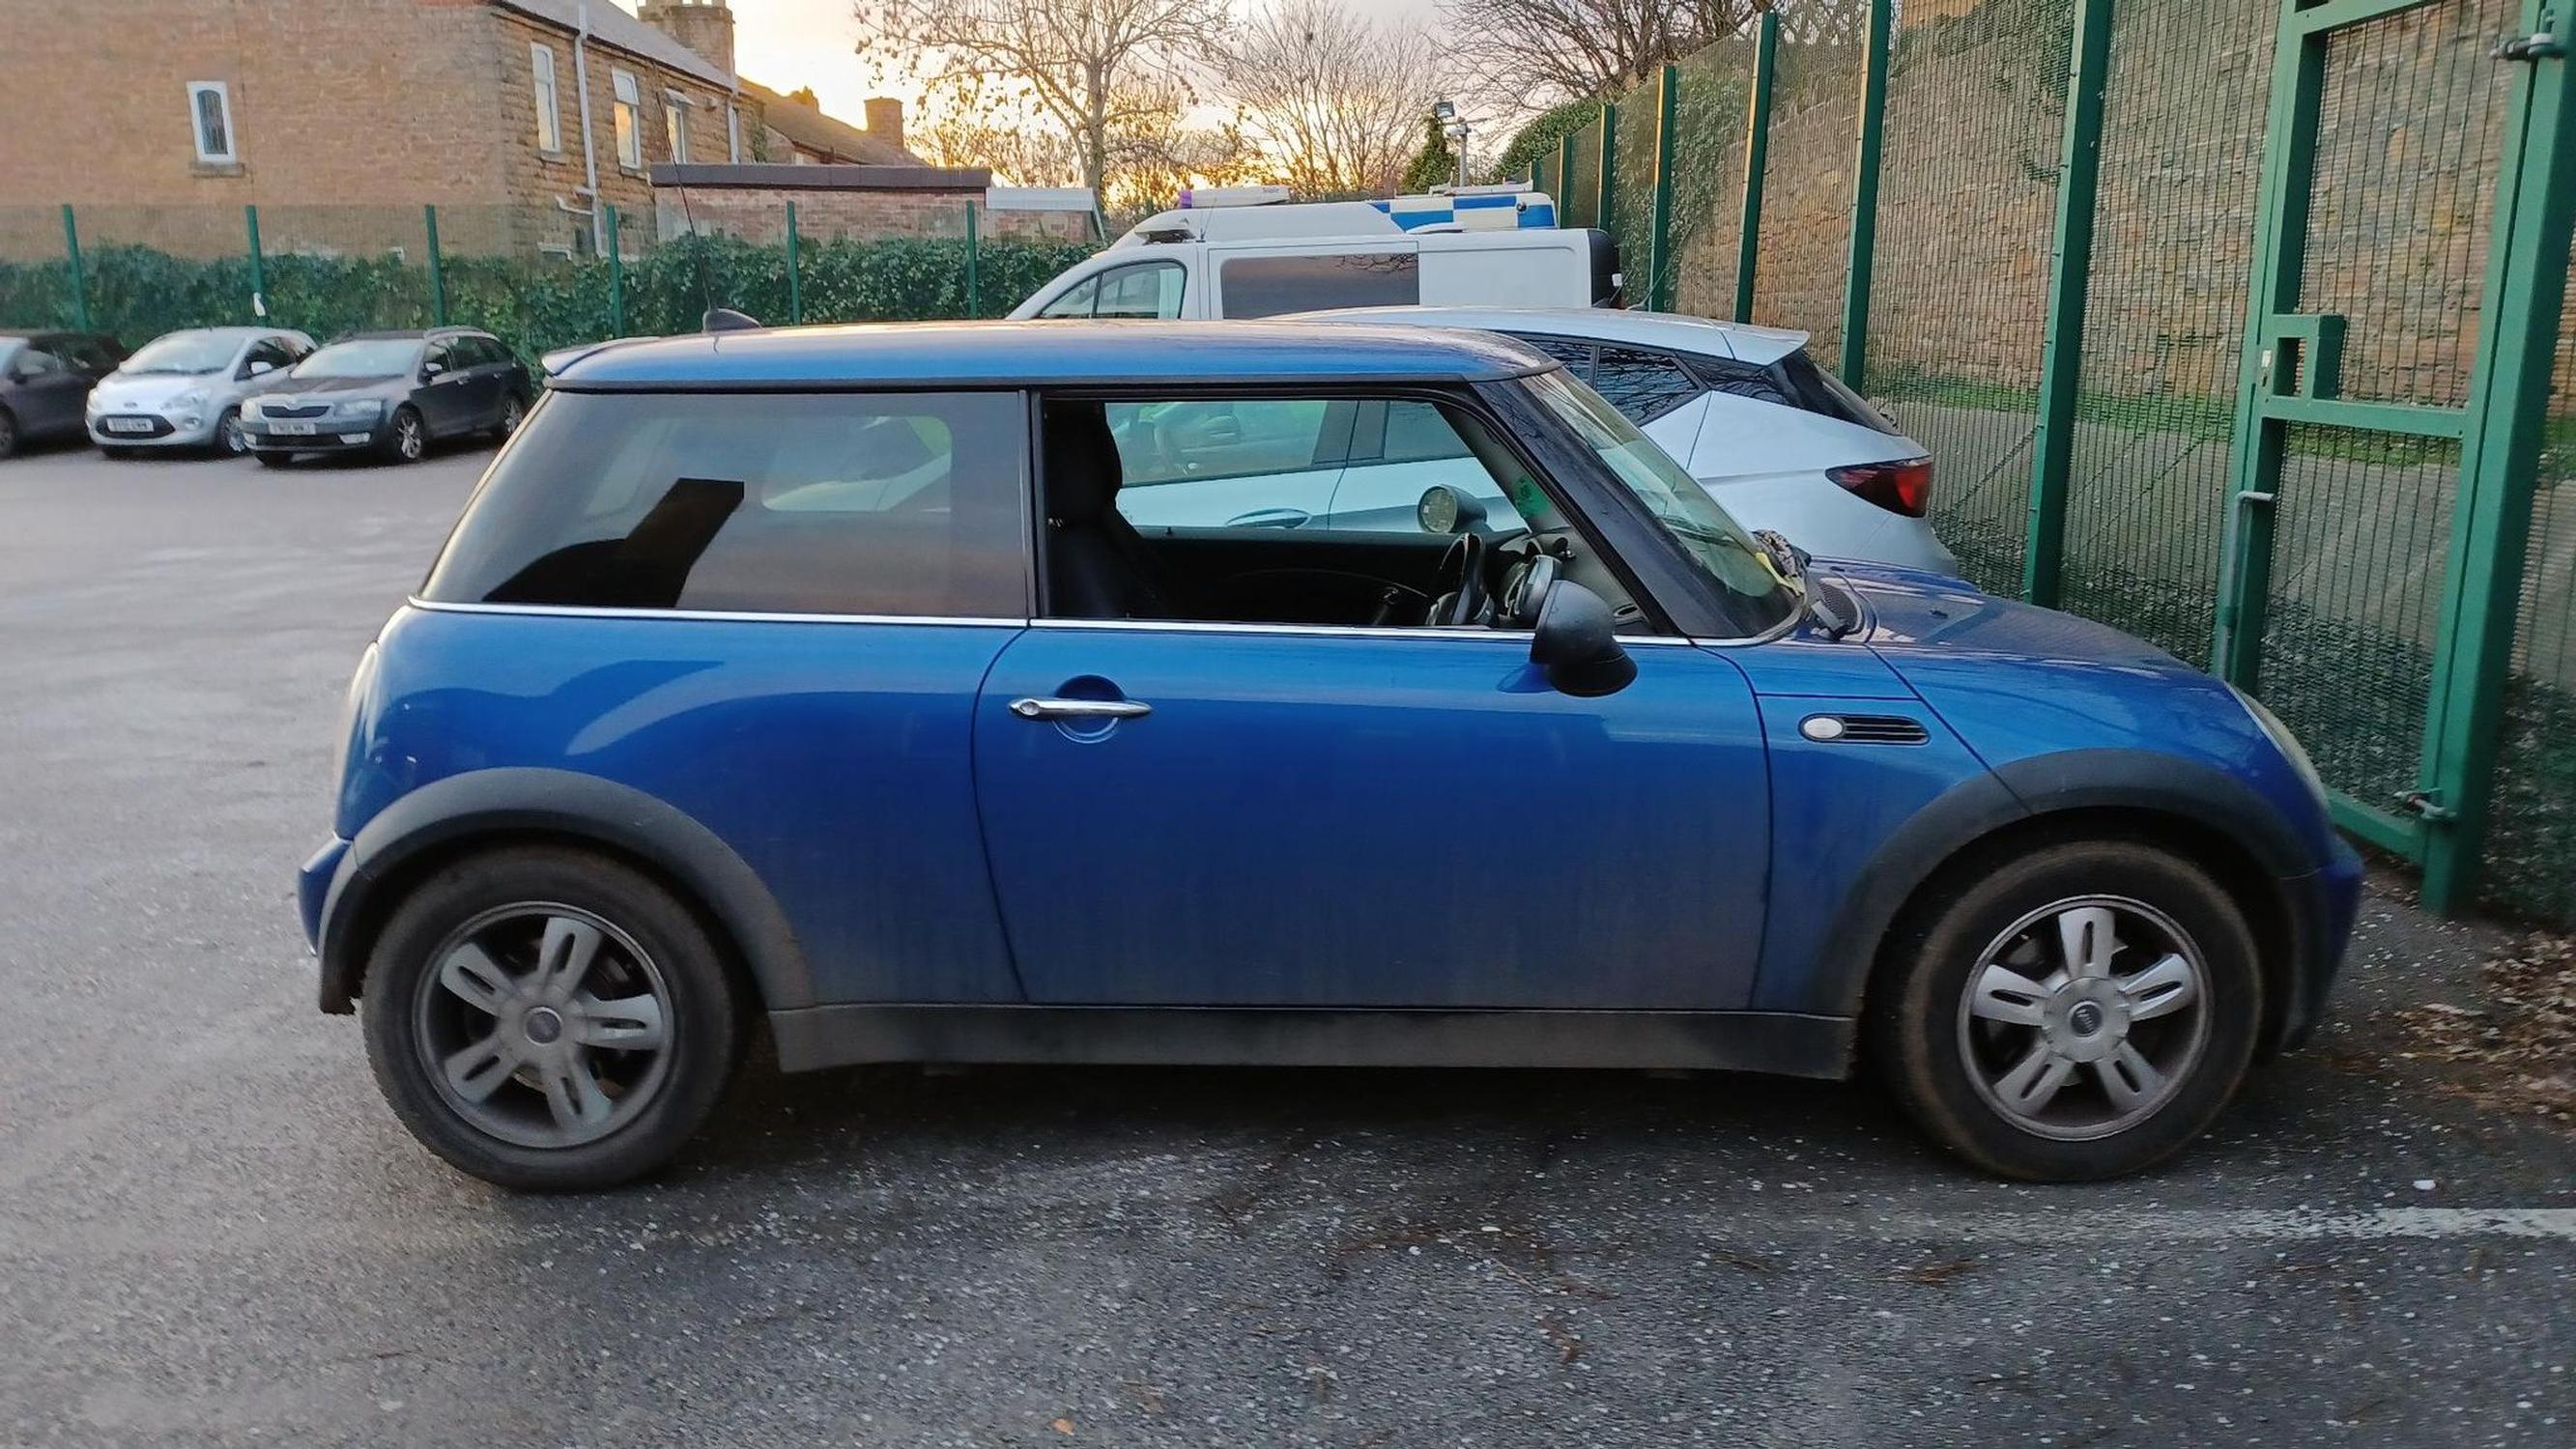 Nottinghamshire Police seized the Mini One